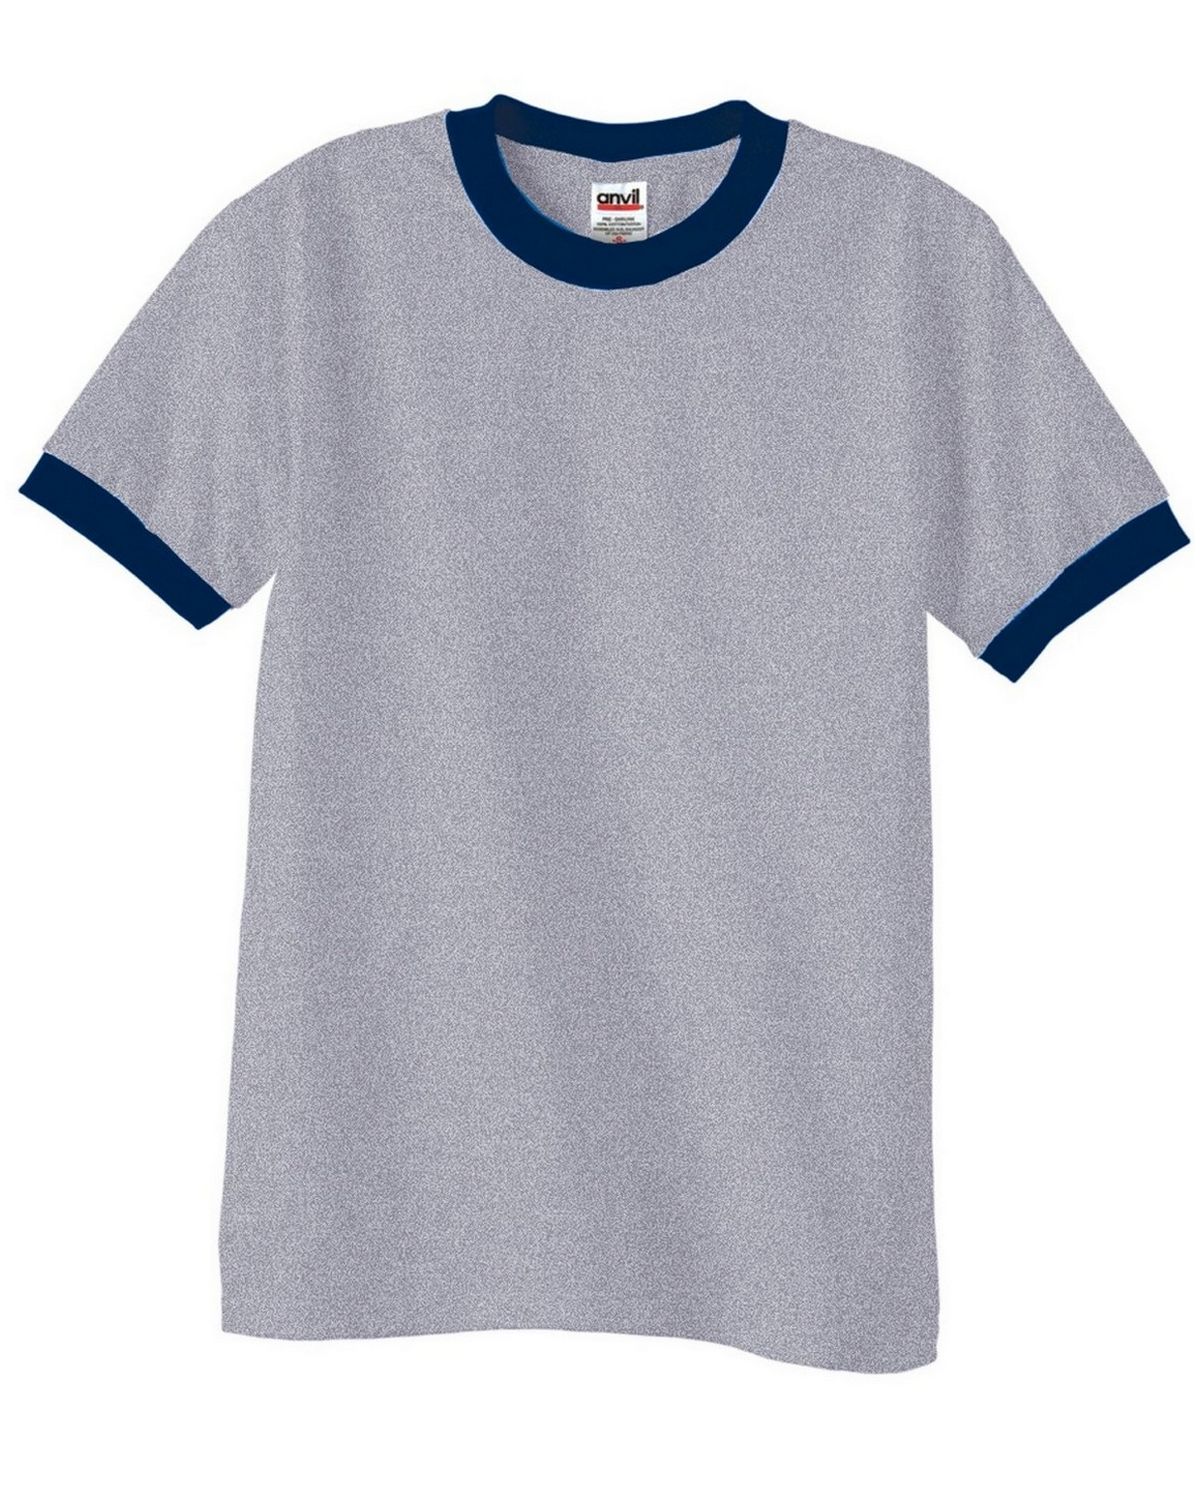 Anvil 923 Cotton Ringer T-Shirt